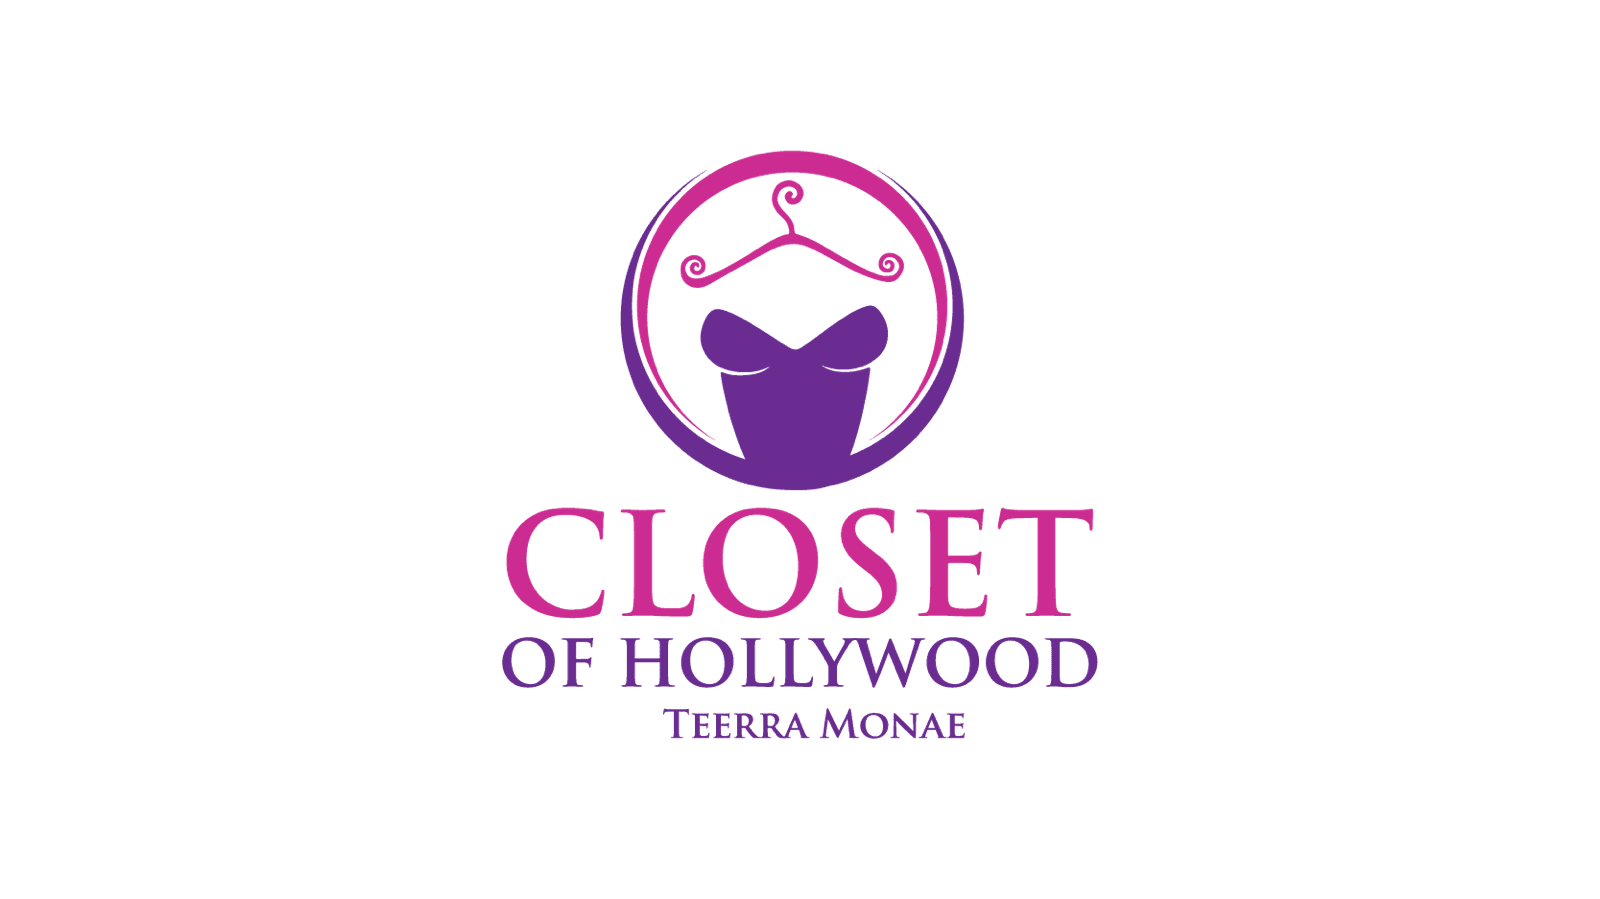 Closet of Hollywood